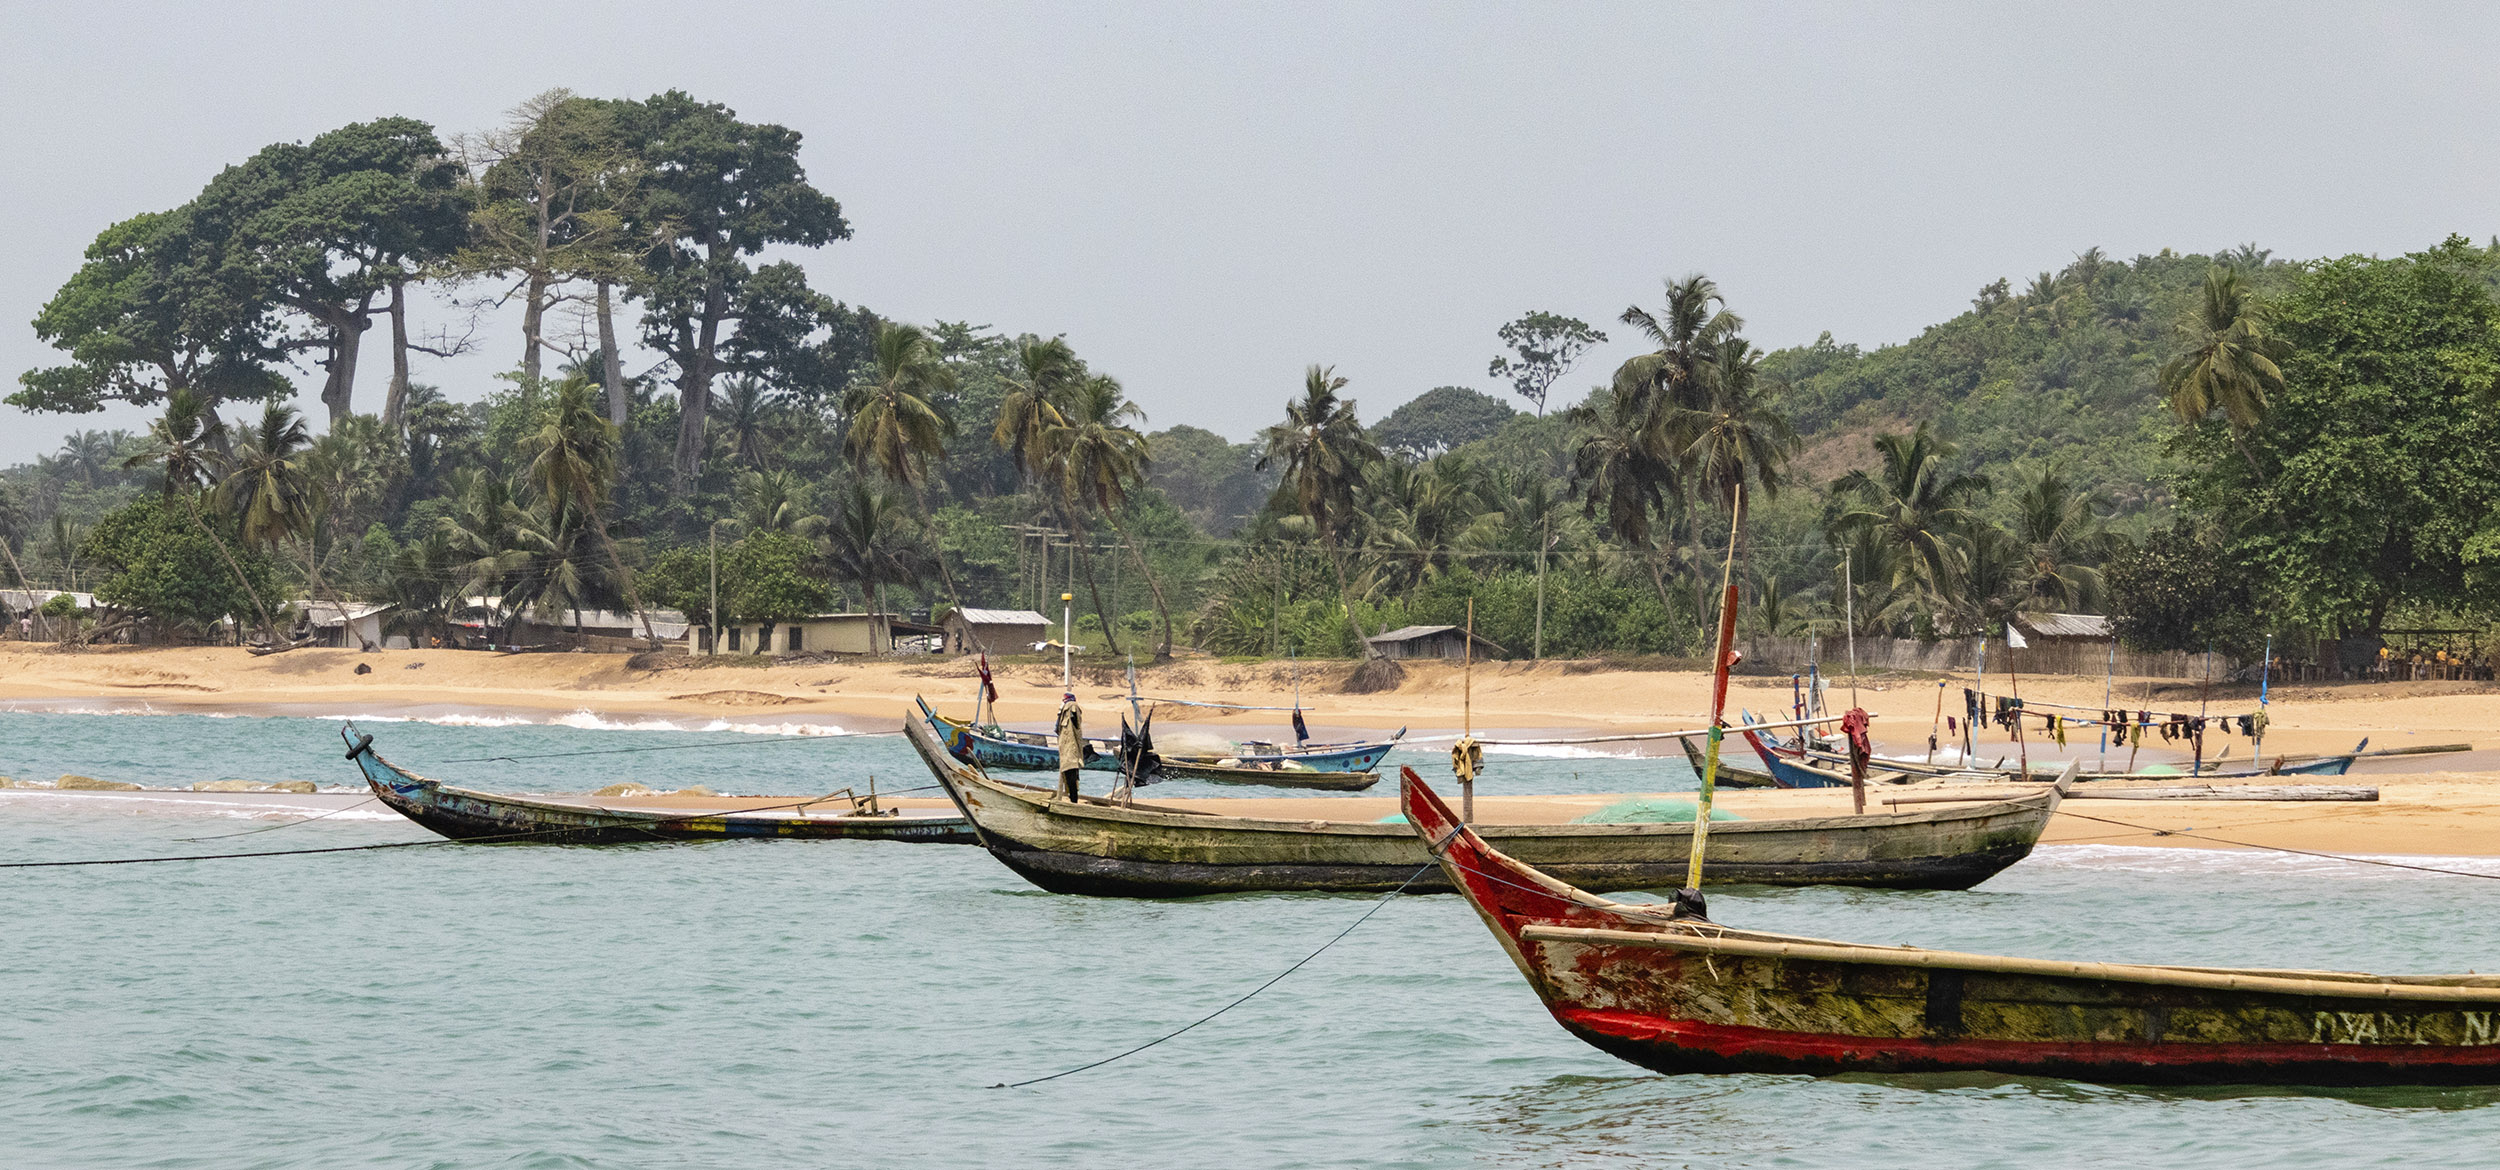 Fishing boats on the water near a beach in Axim, Ghana. 